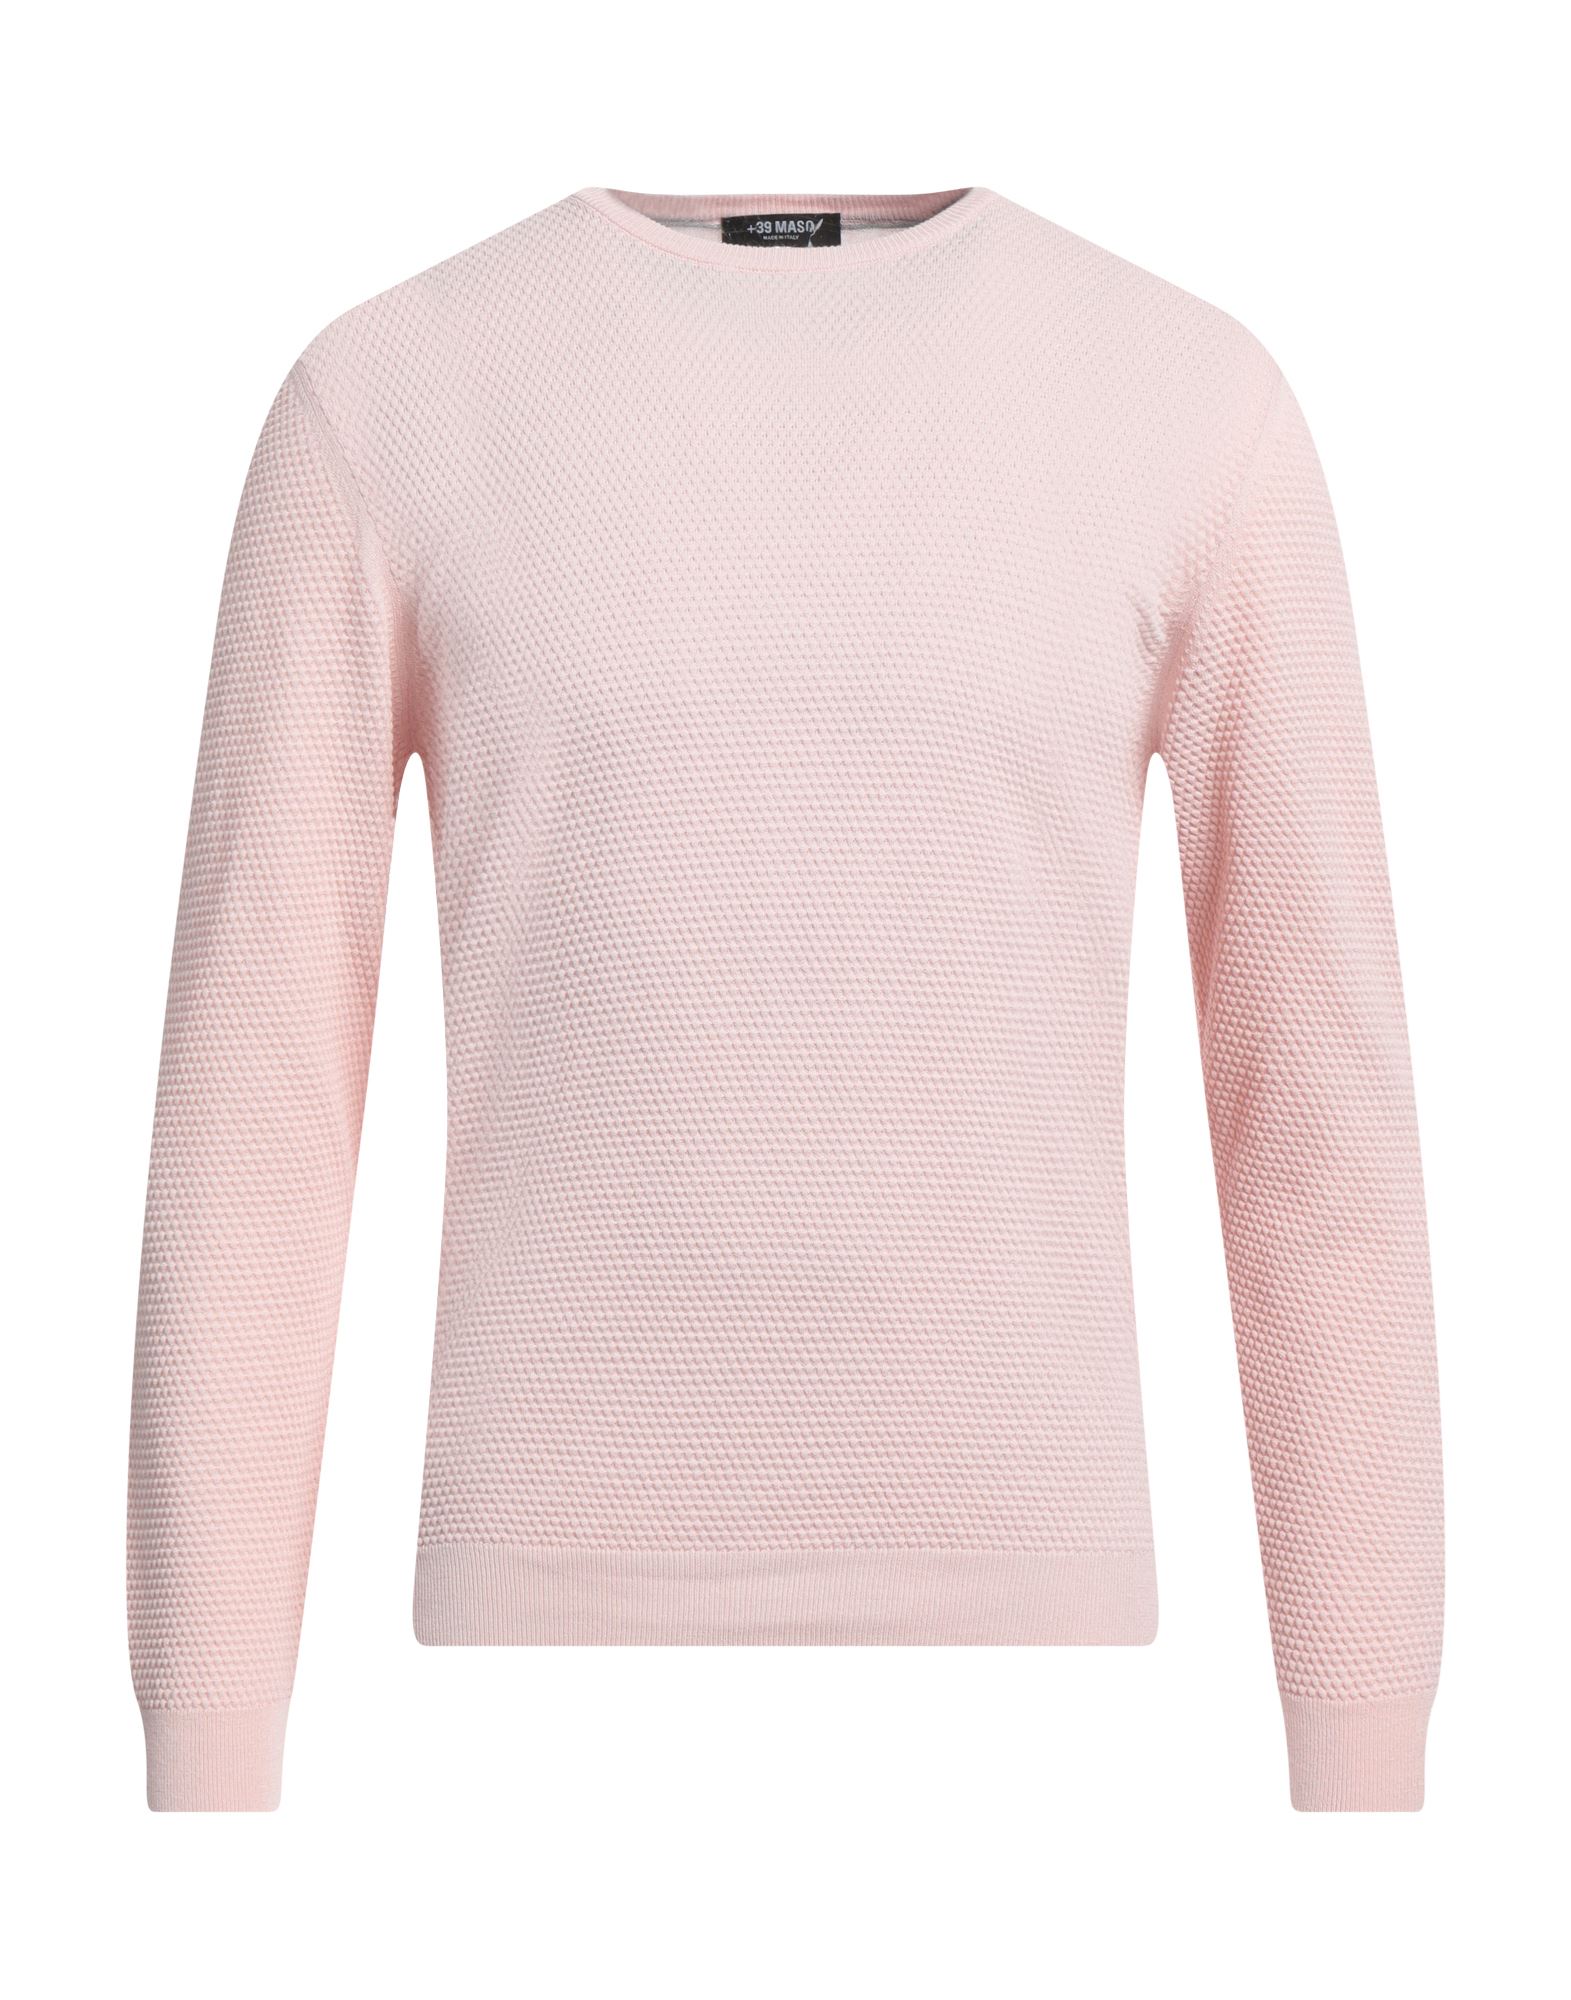 +39 Masq Man Sweater Pink Size Xxl Cotton